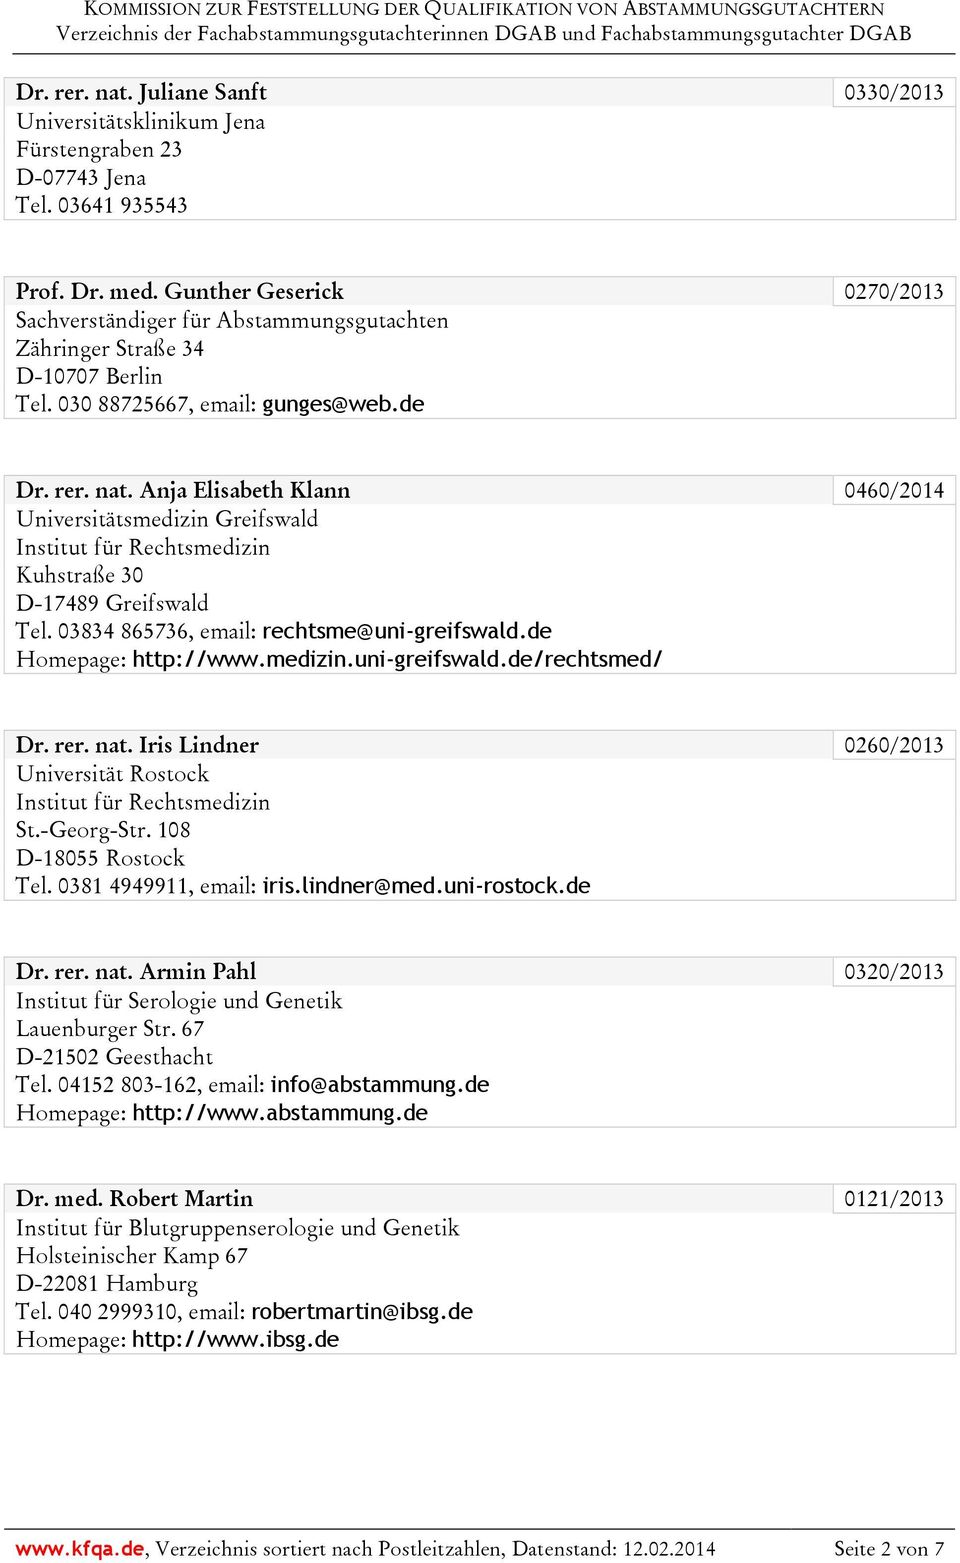 Anja Elisabeth Klann 0460/2014 Universitätsmedizin Greifswald Kuhstraße 30 D-17489 Greifswald Tel. 03834 865736, email: rechtsme@uni-greifswald.de Homepage: http://www.medizin.uni-greifswald.de/rechtsmed/ Dr.